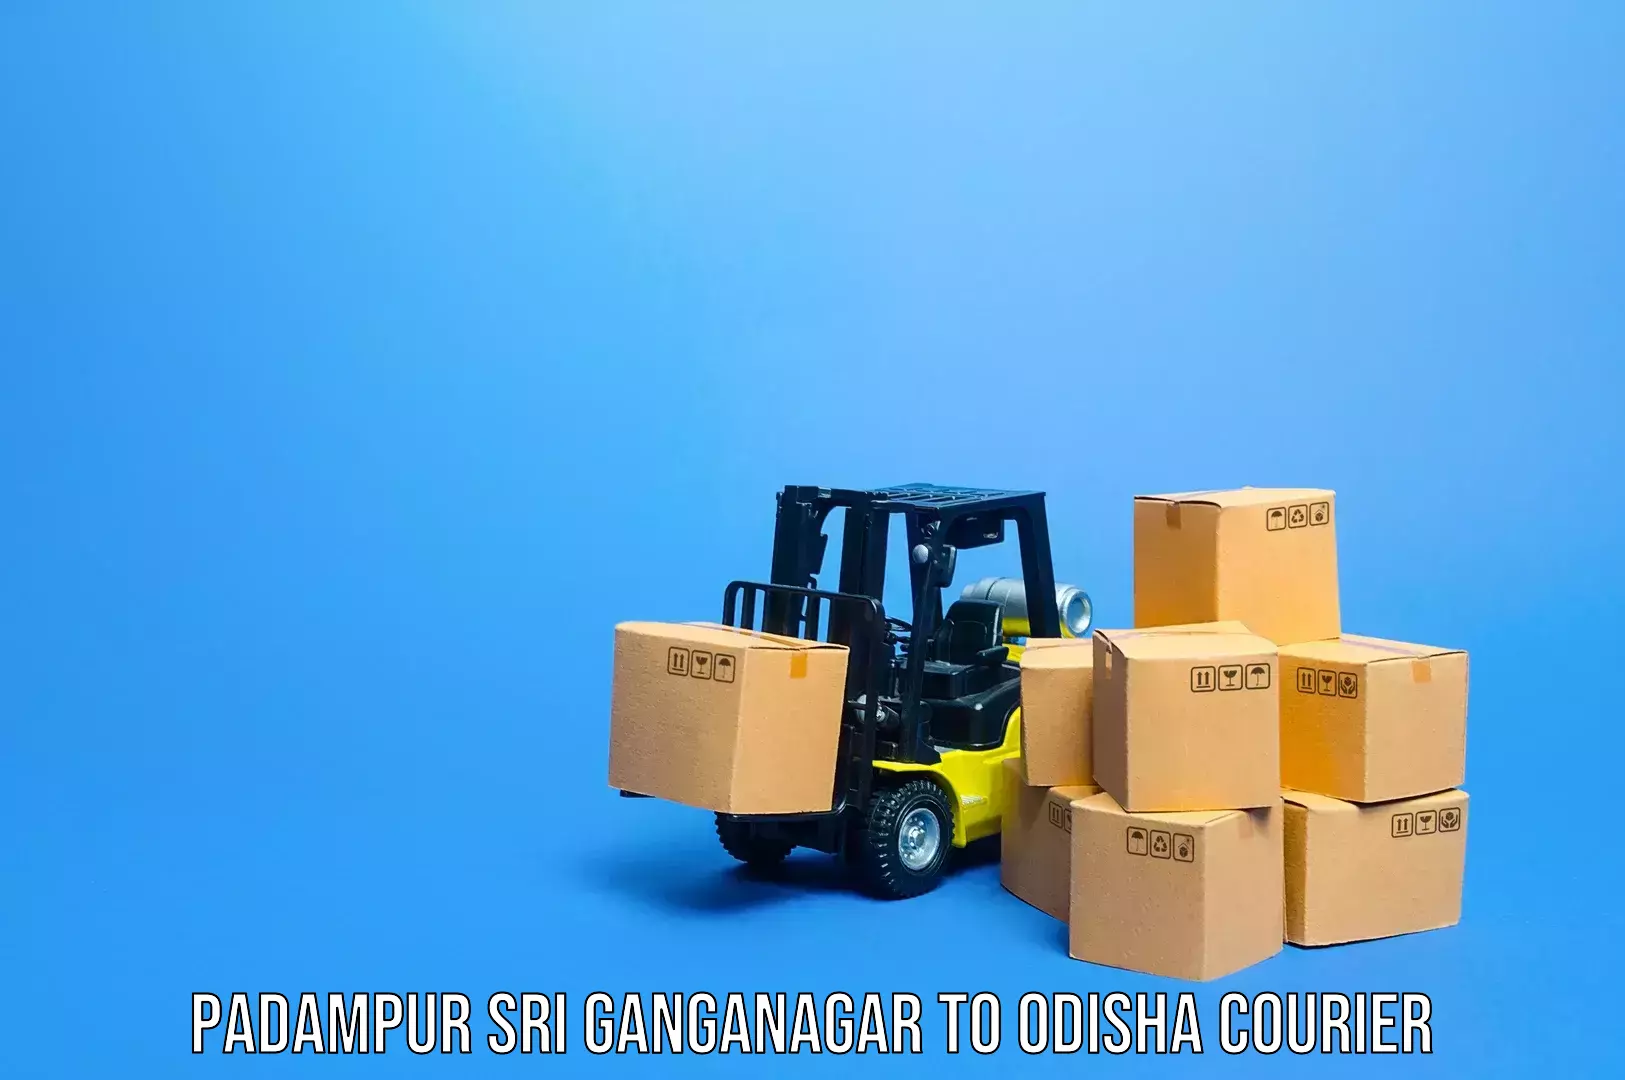 Baggage transport technology Padampur Sri Ganganagar to Odisha